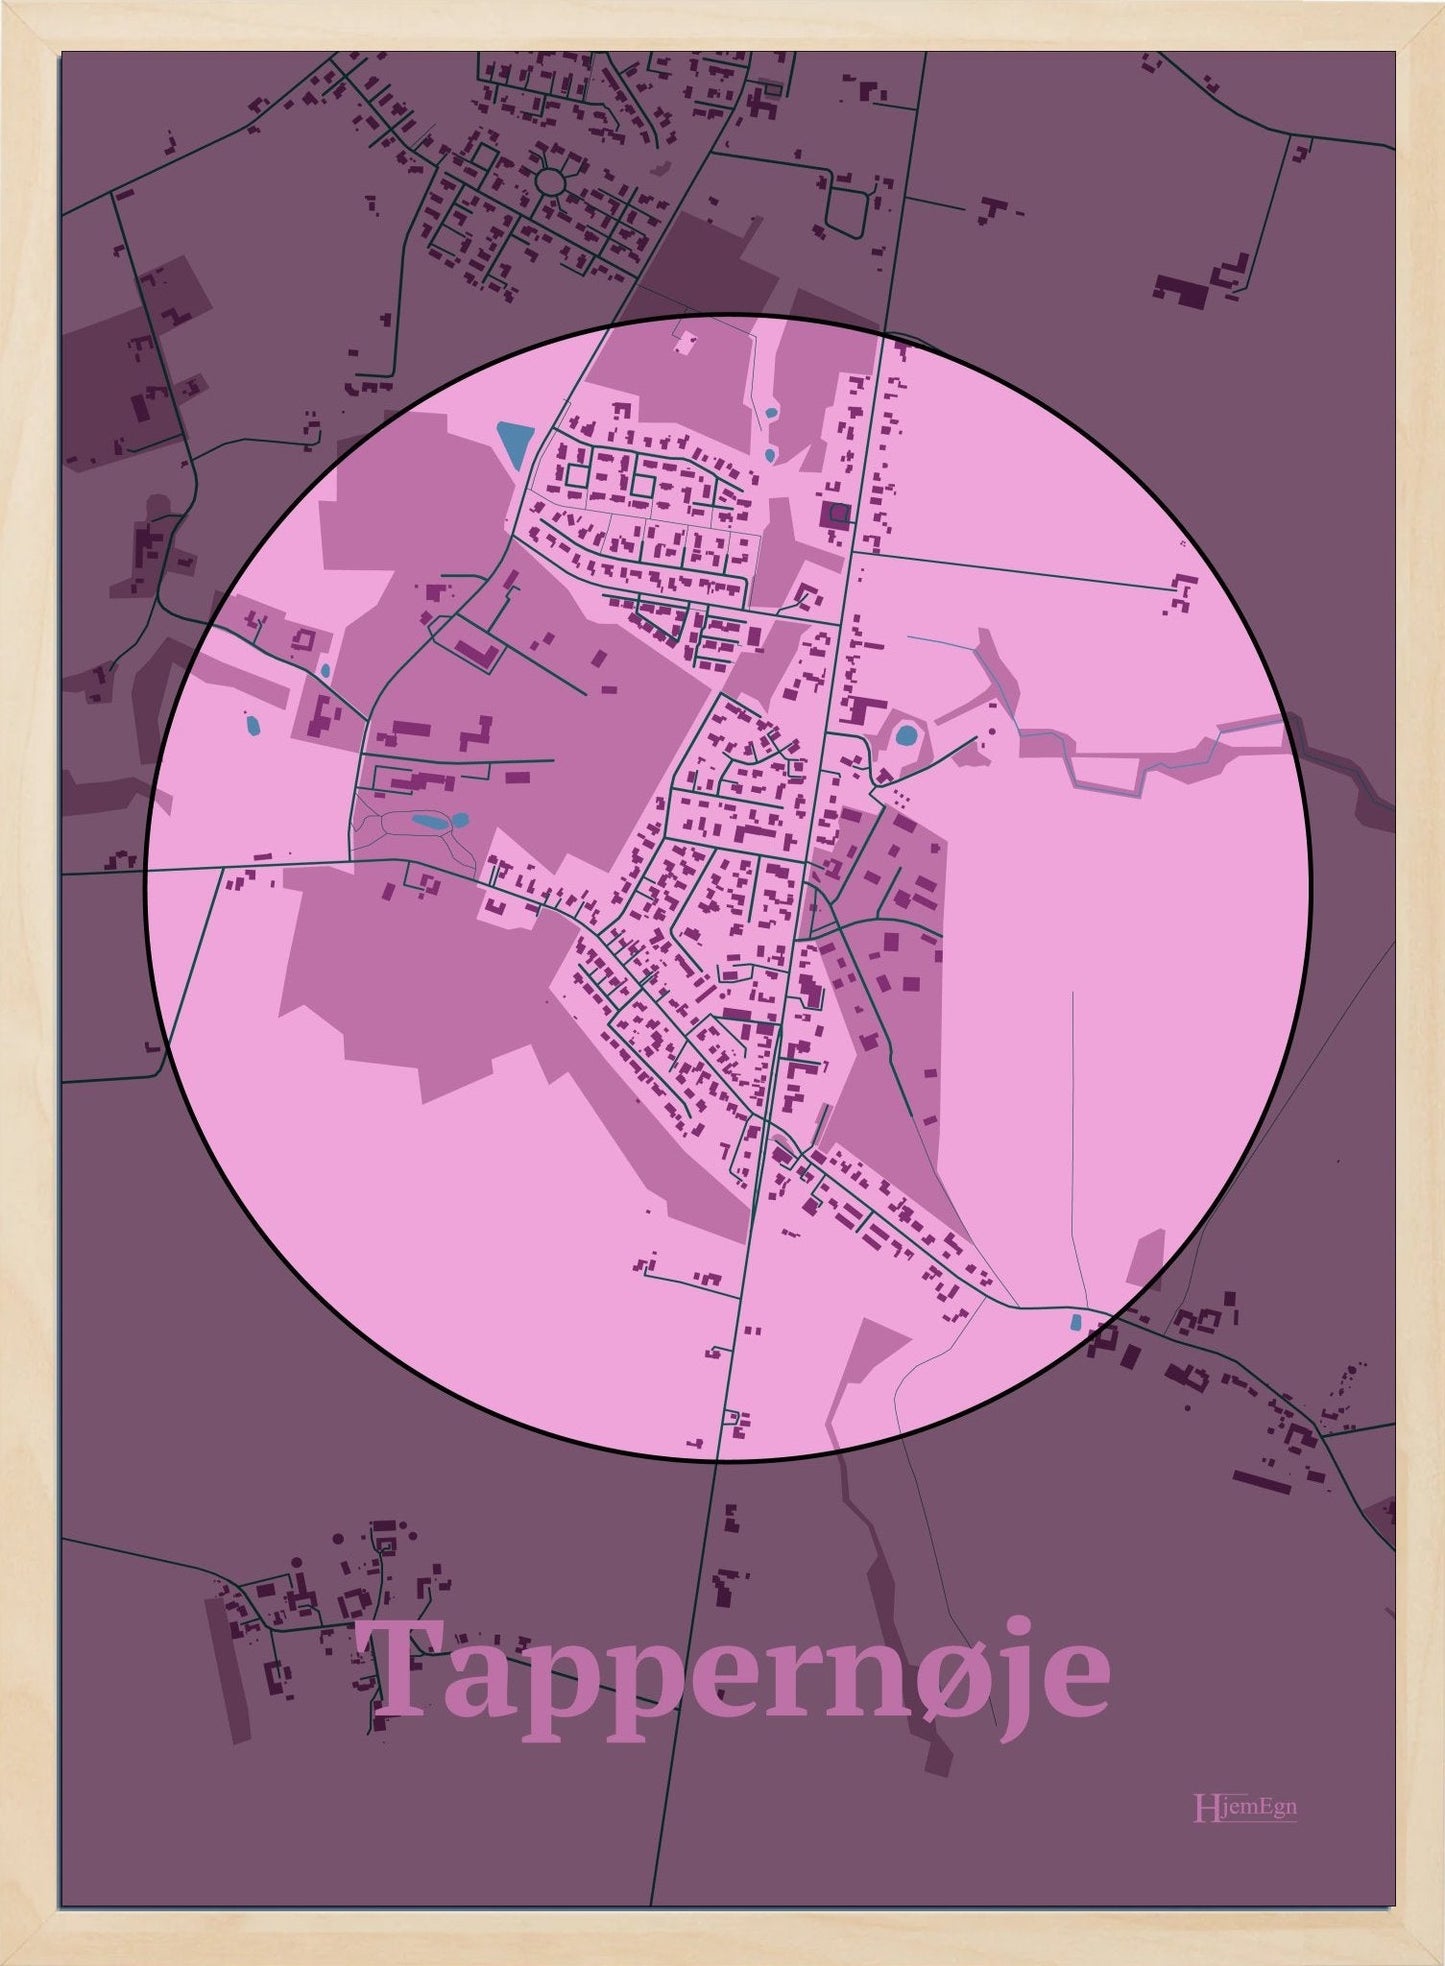 Tappernøje plakat i farve pastel rød og HjemEgn.dk design centrum. Design bykort for Tappernøje